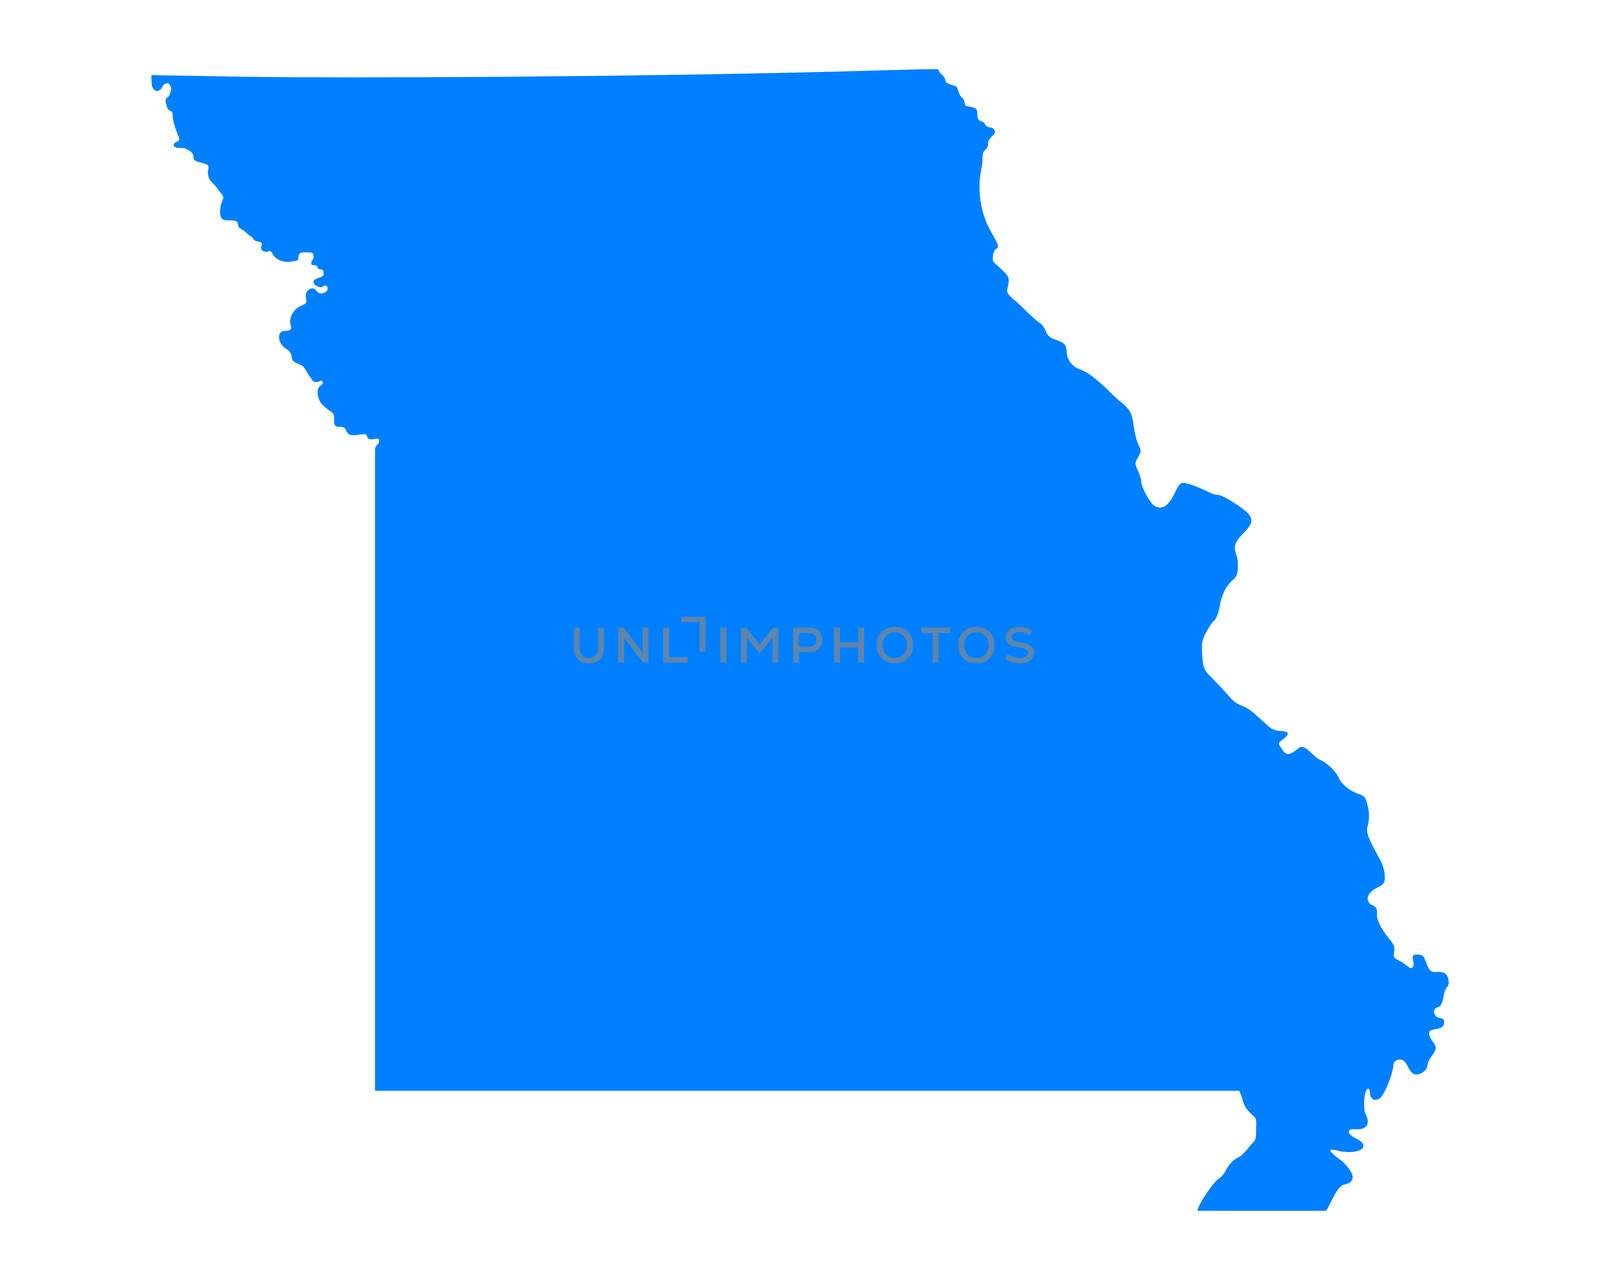 Map of Missouri by rbiedermann